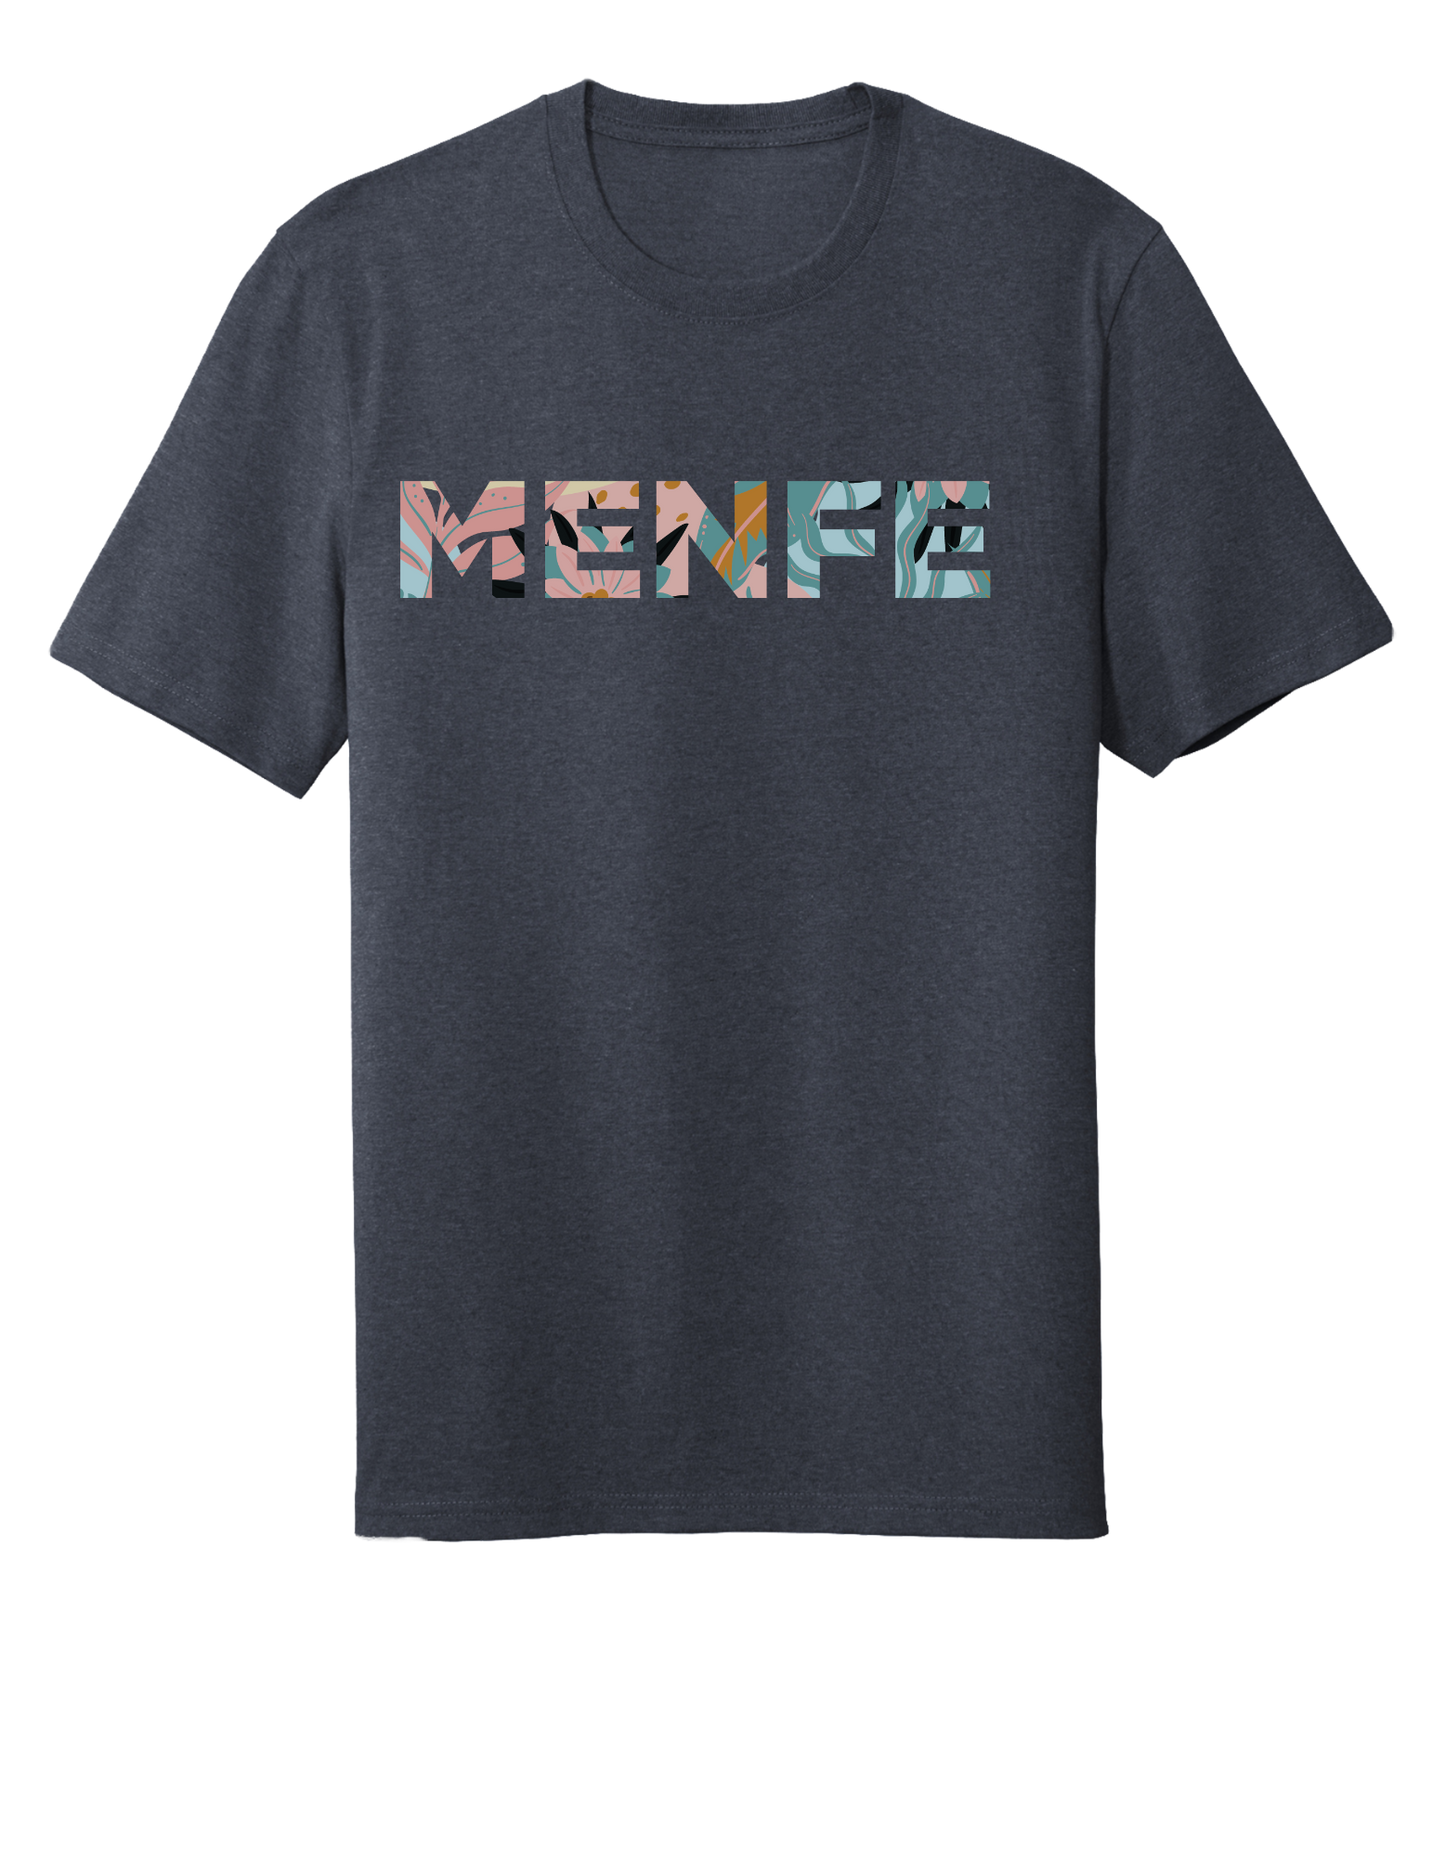 Tropical Menfe T-Shirt - Navy Heather